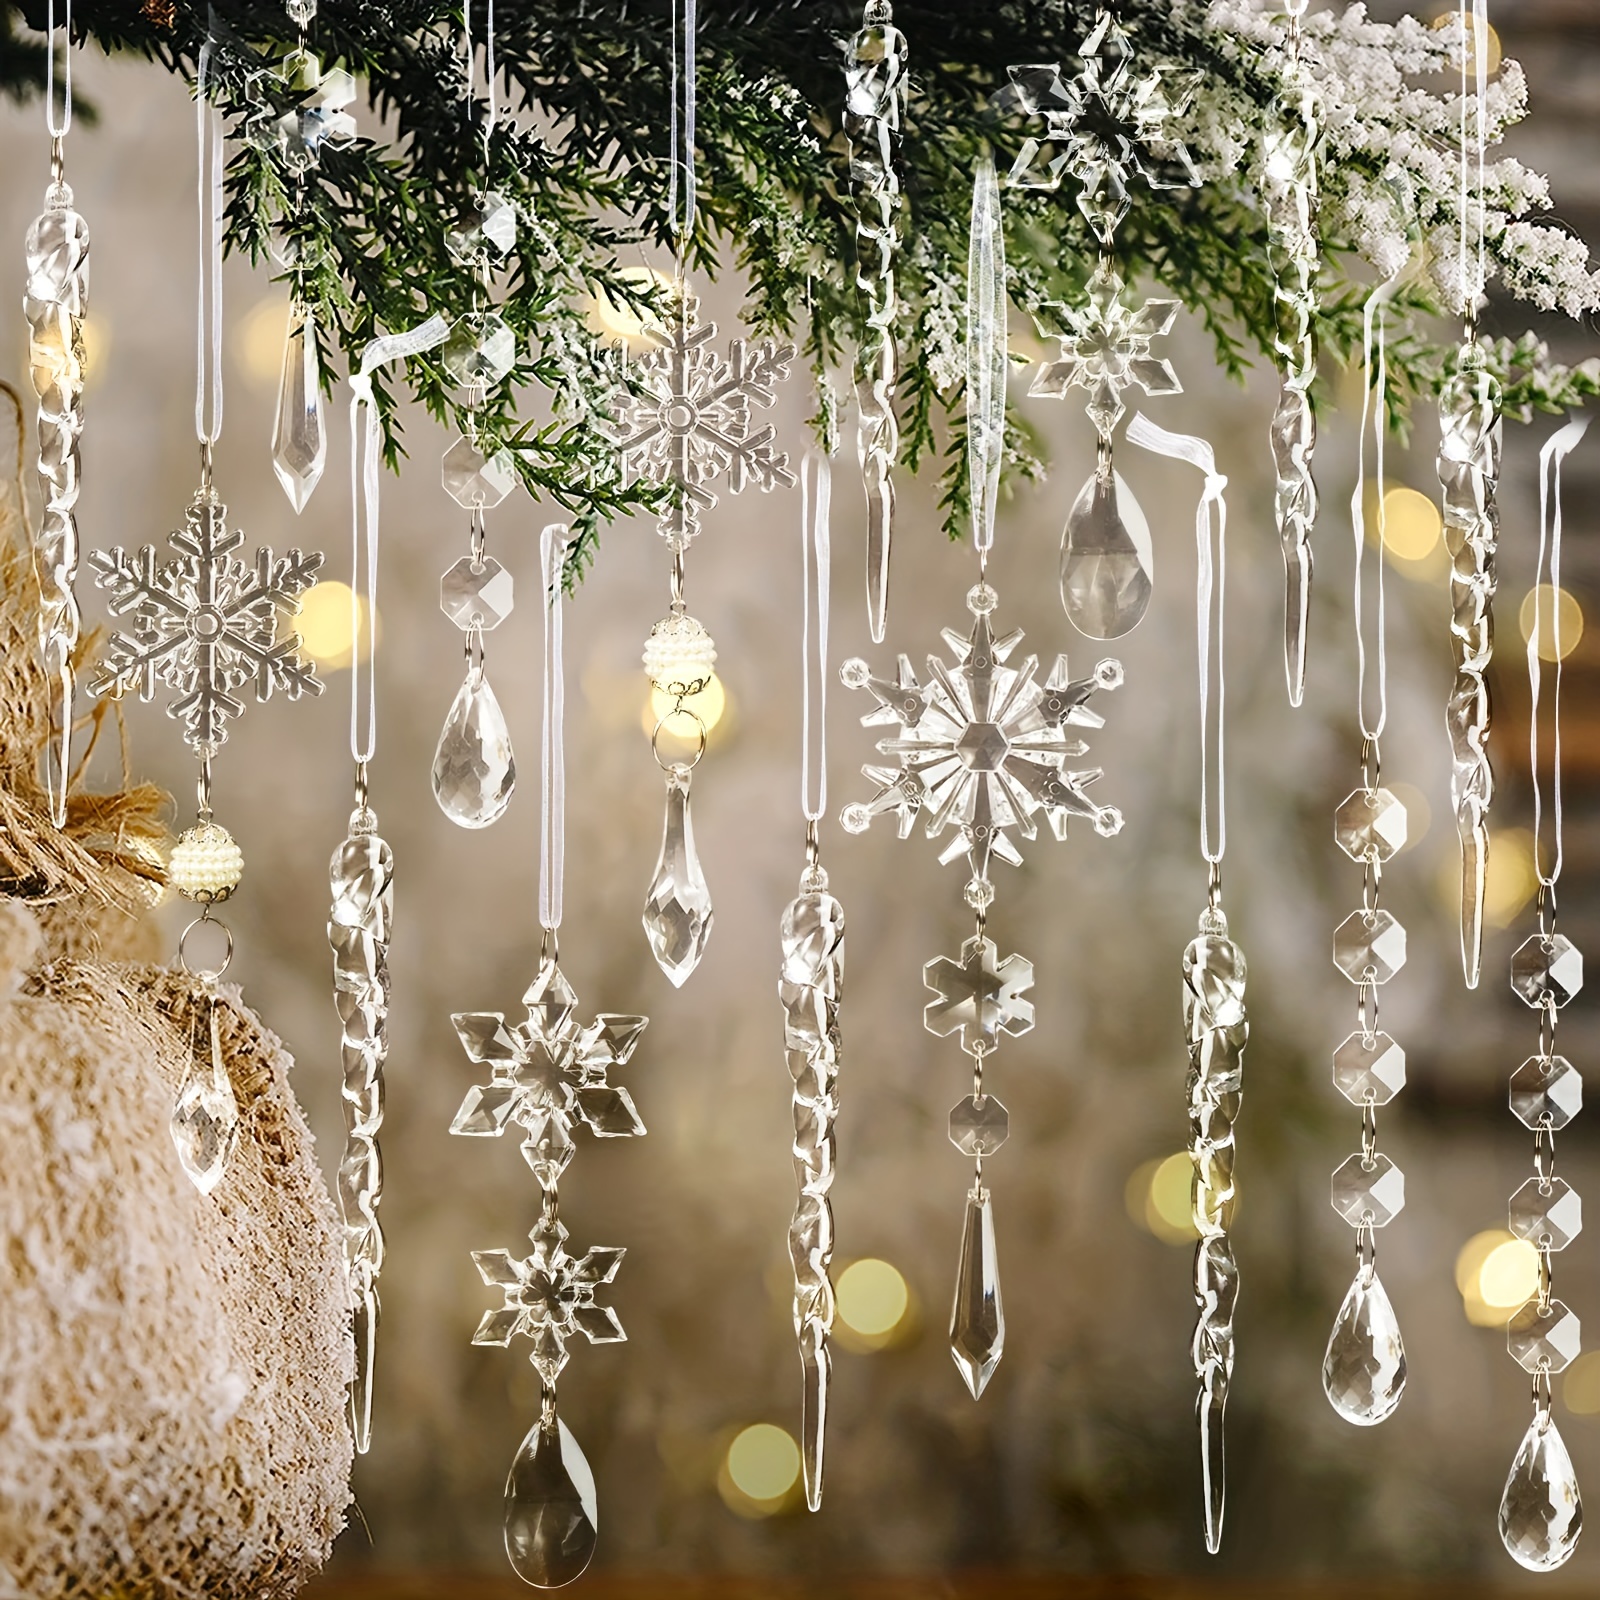 5 White Christmas Decorating Ideas